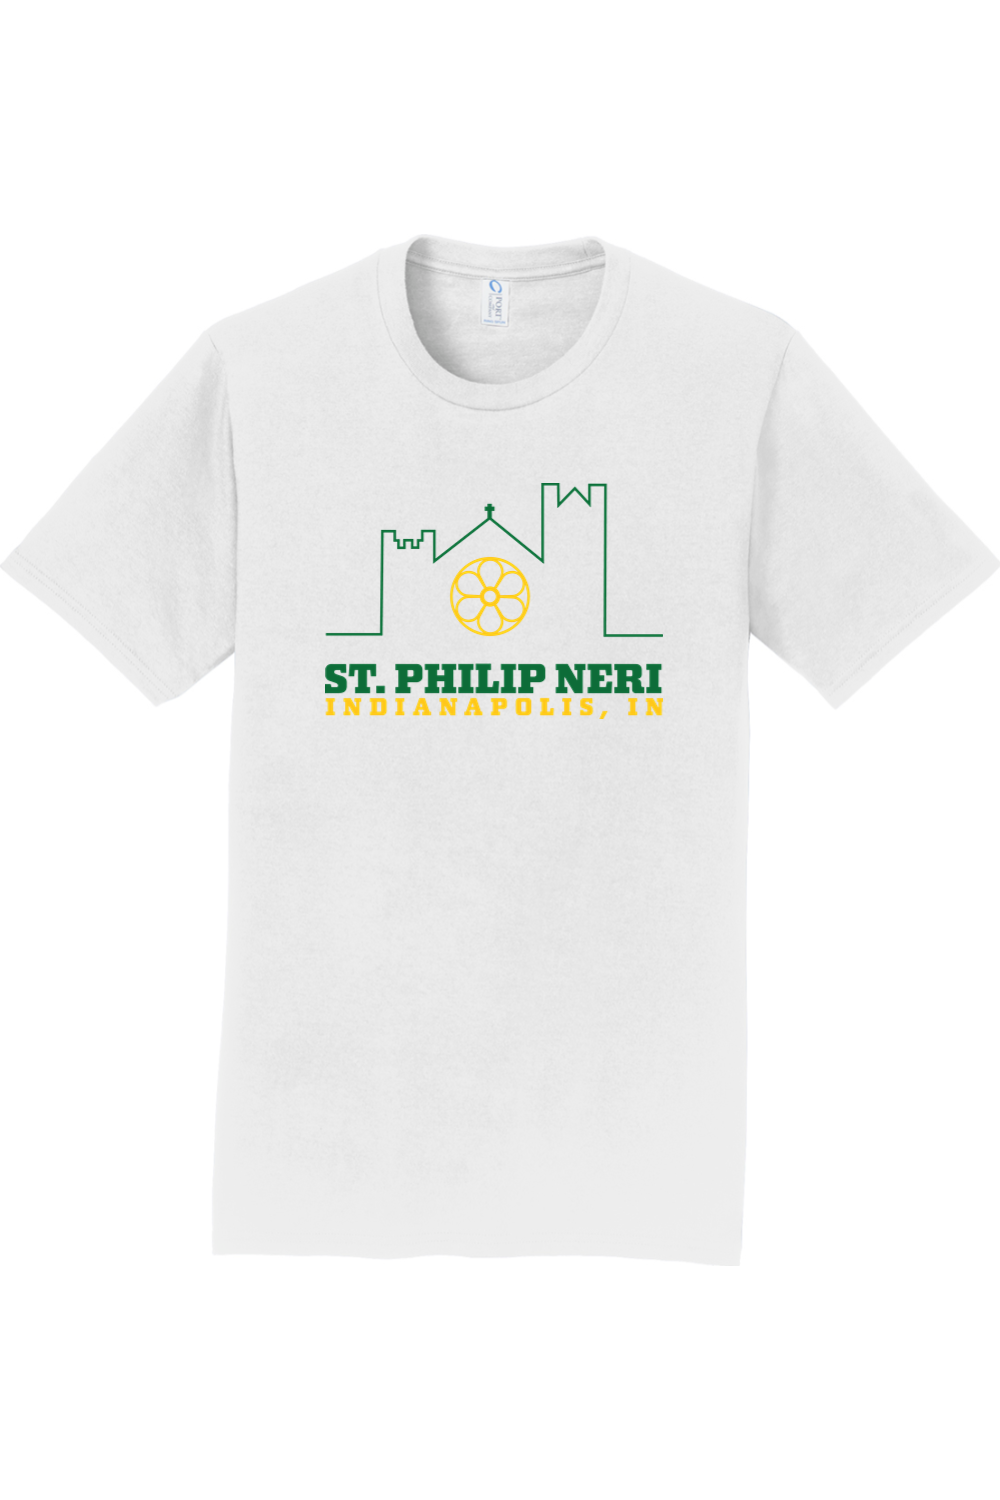 St Philip Neri - SPN46201 - T-Shirt